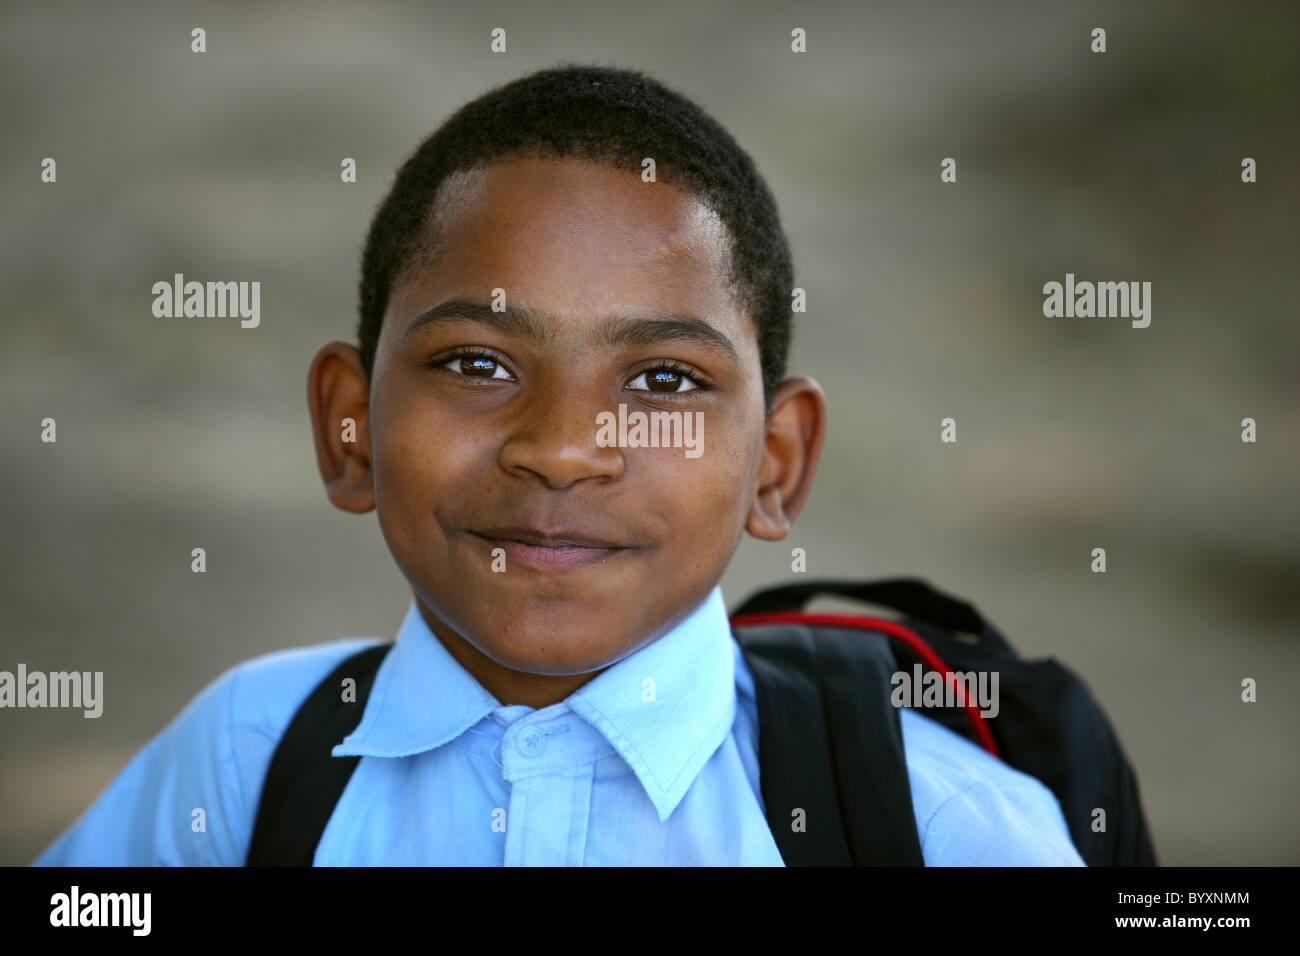 Dominican Republic, Santo Domingo, children in school uniform, Caribbean Stock Photo